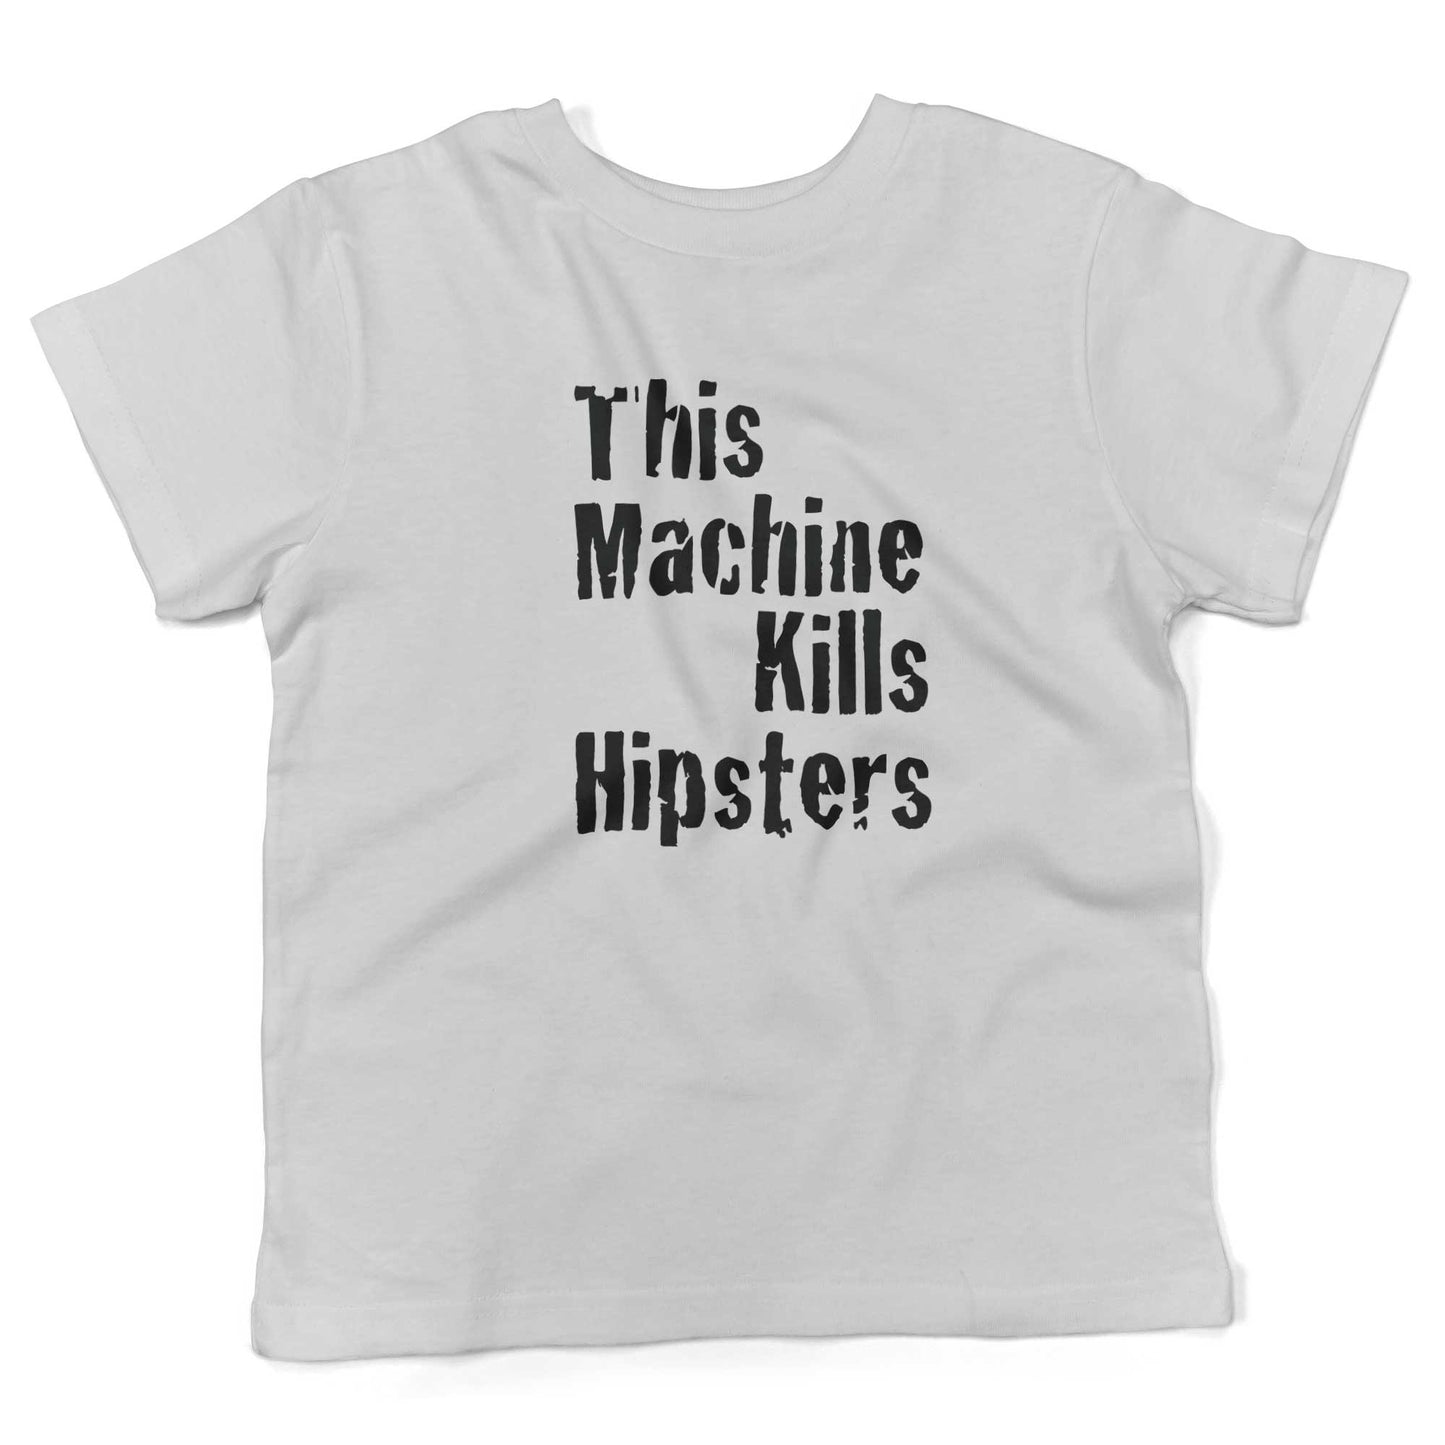 This Machine Kills Hipsters Toddler Shirt-White-2T